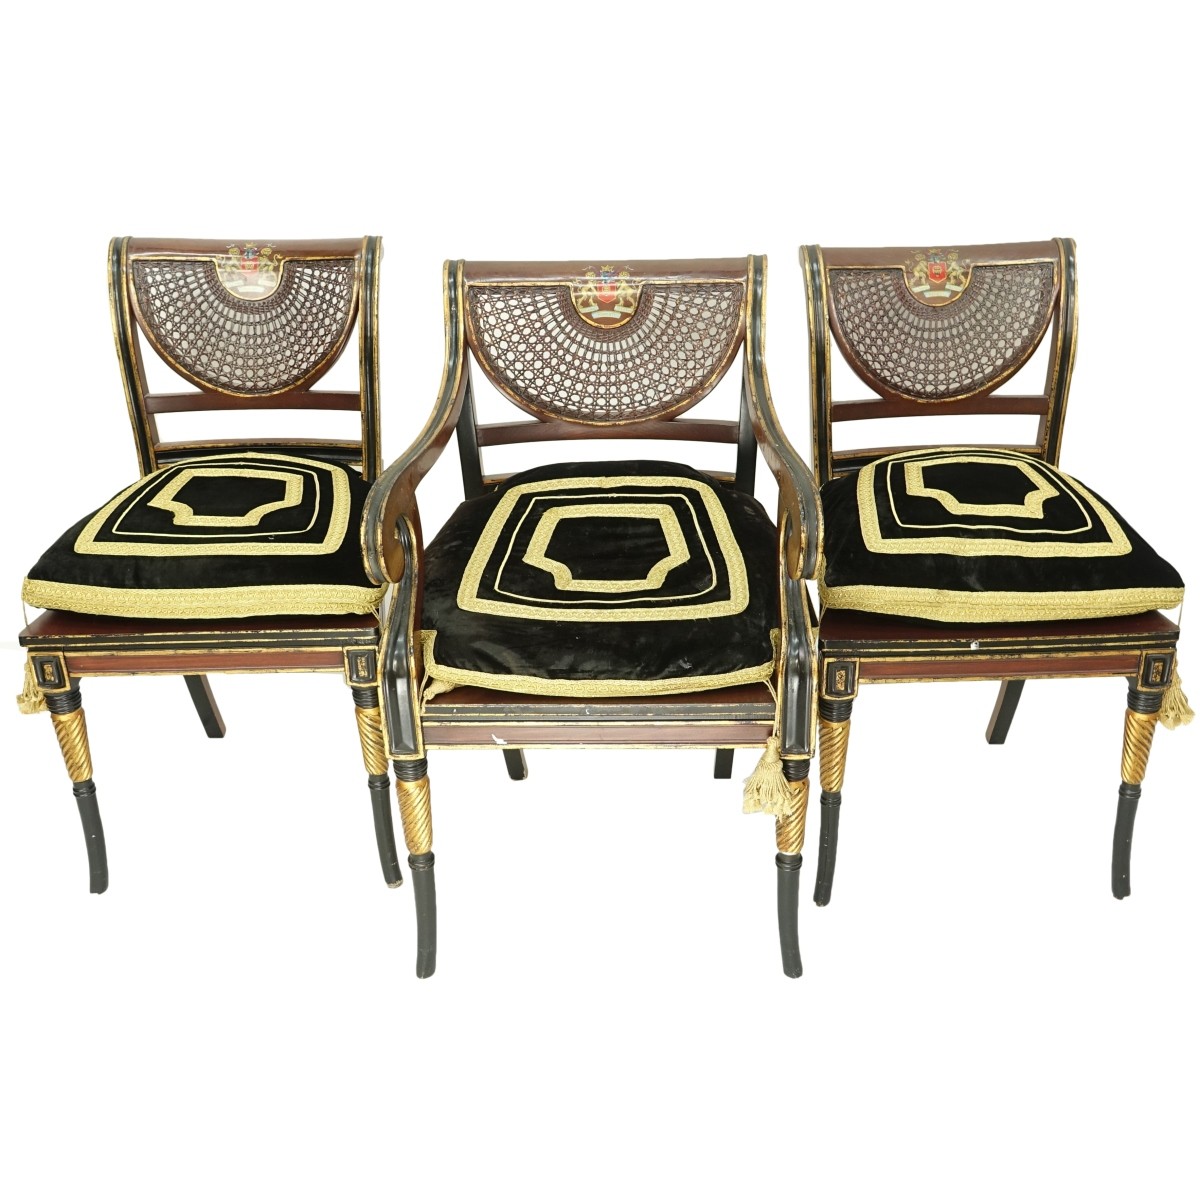 Three Cane Back Chairs